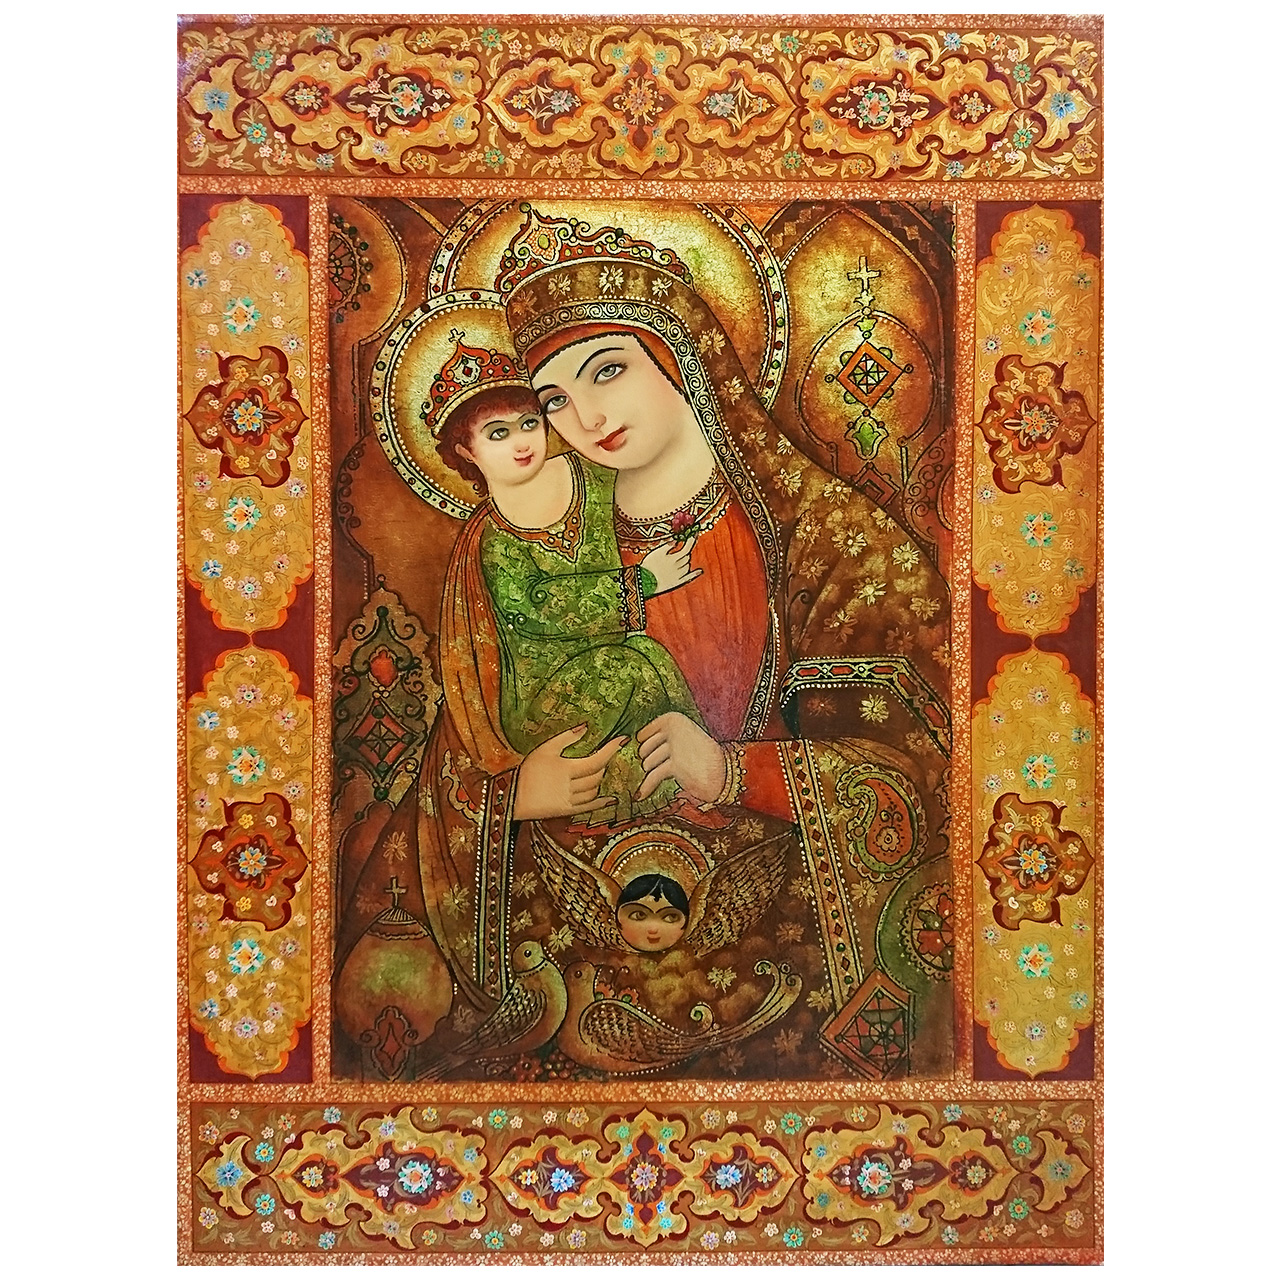 نقاشی طرح حضرت مریم و حضرت مسیح کد A20